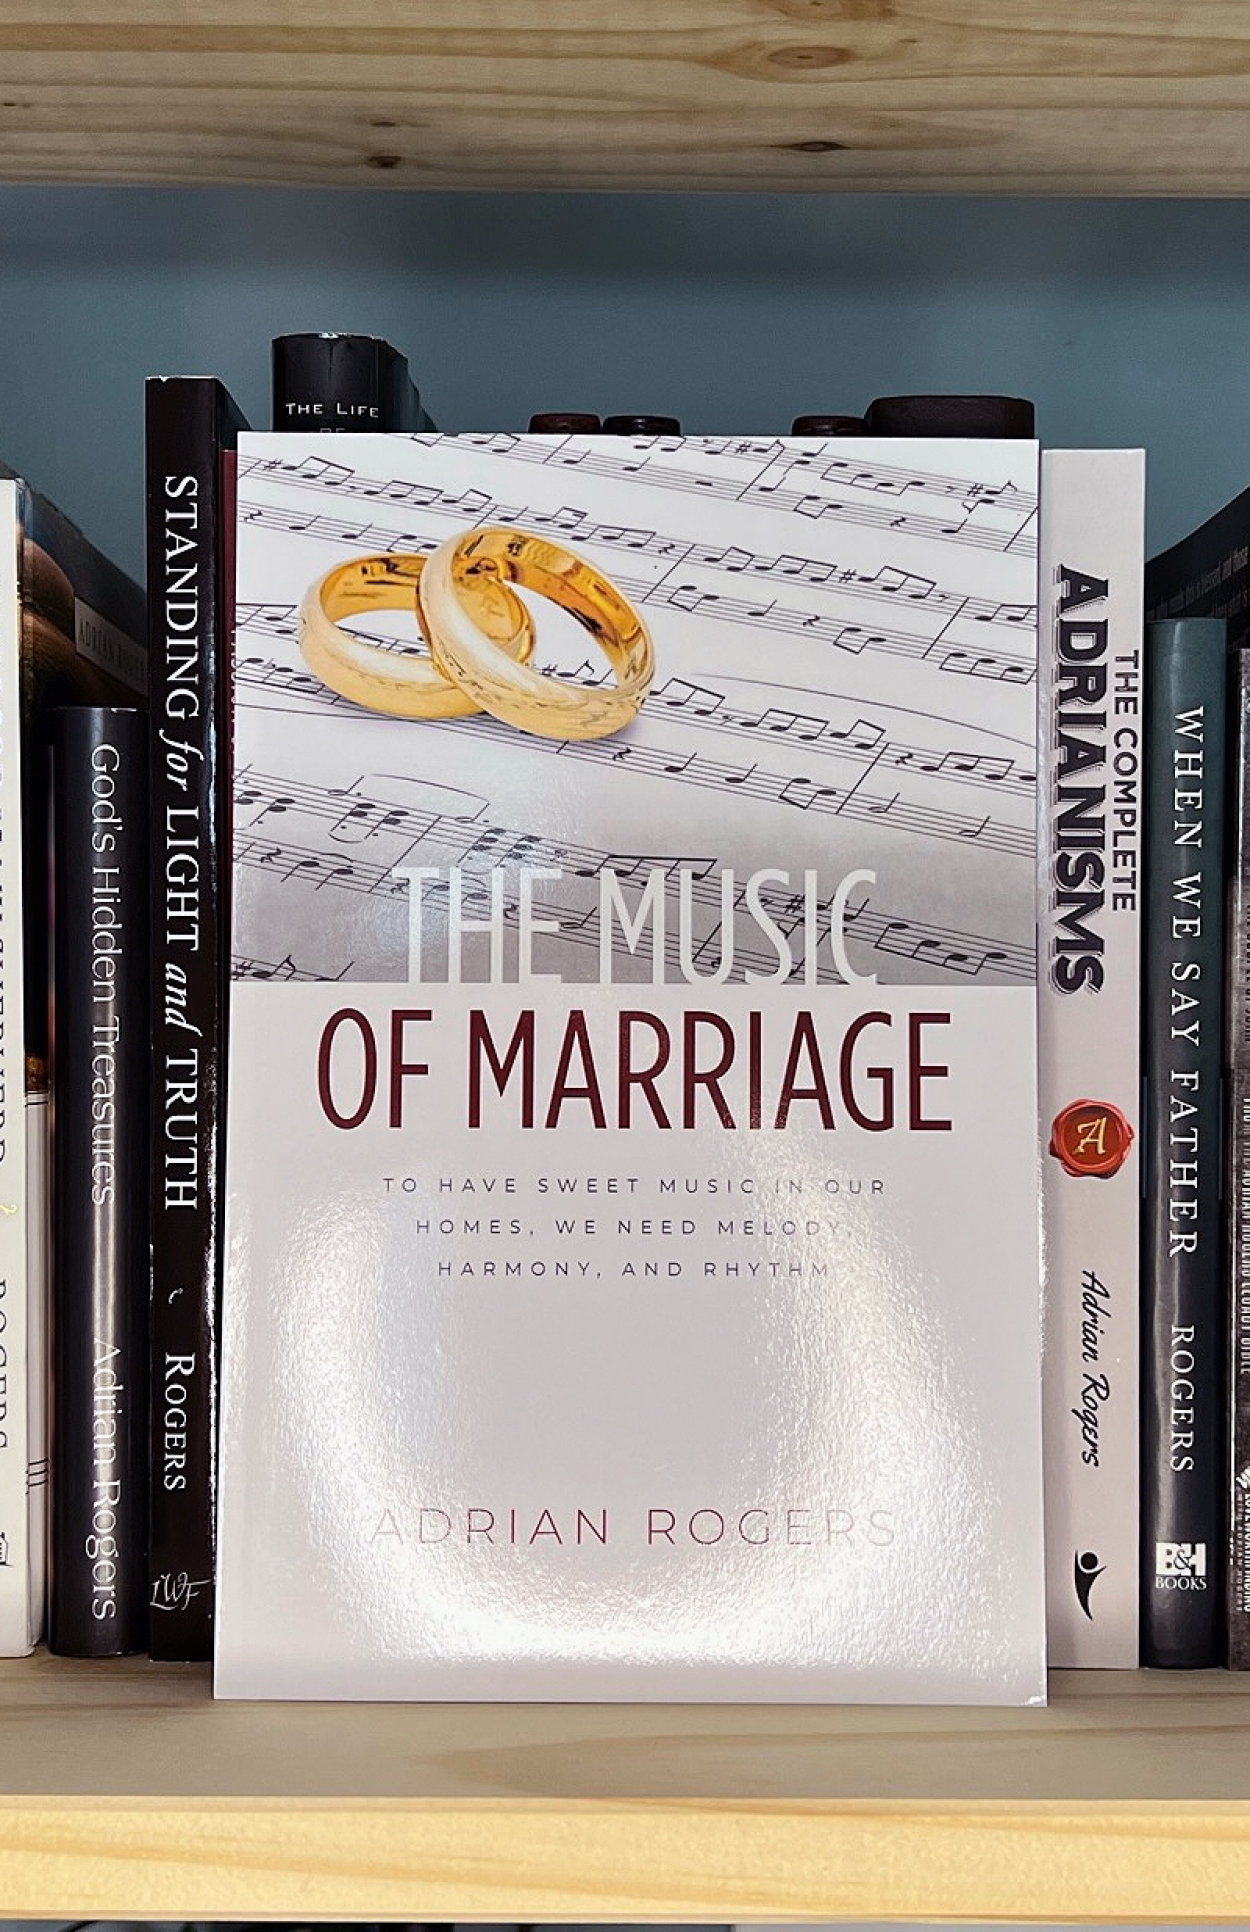 B136 the music of marriage book BOOKSHELF